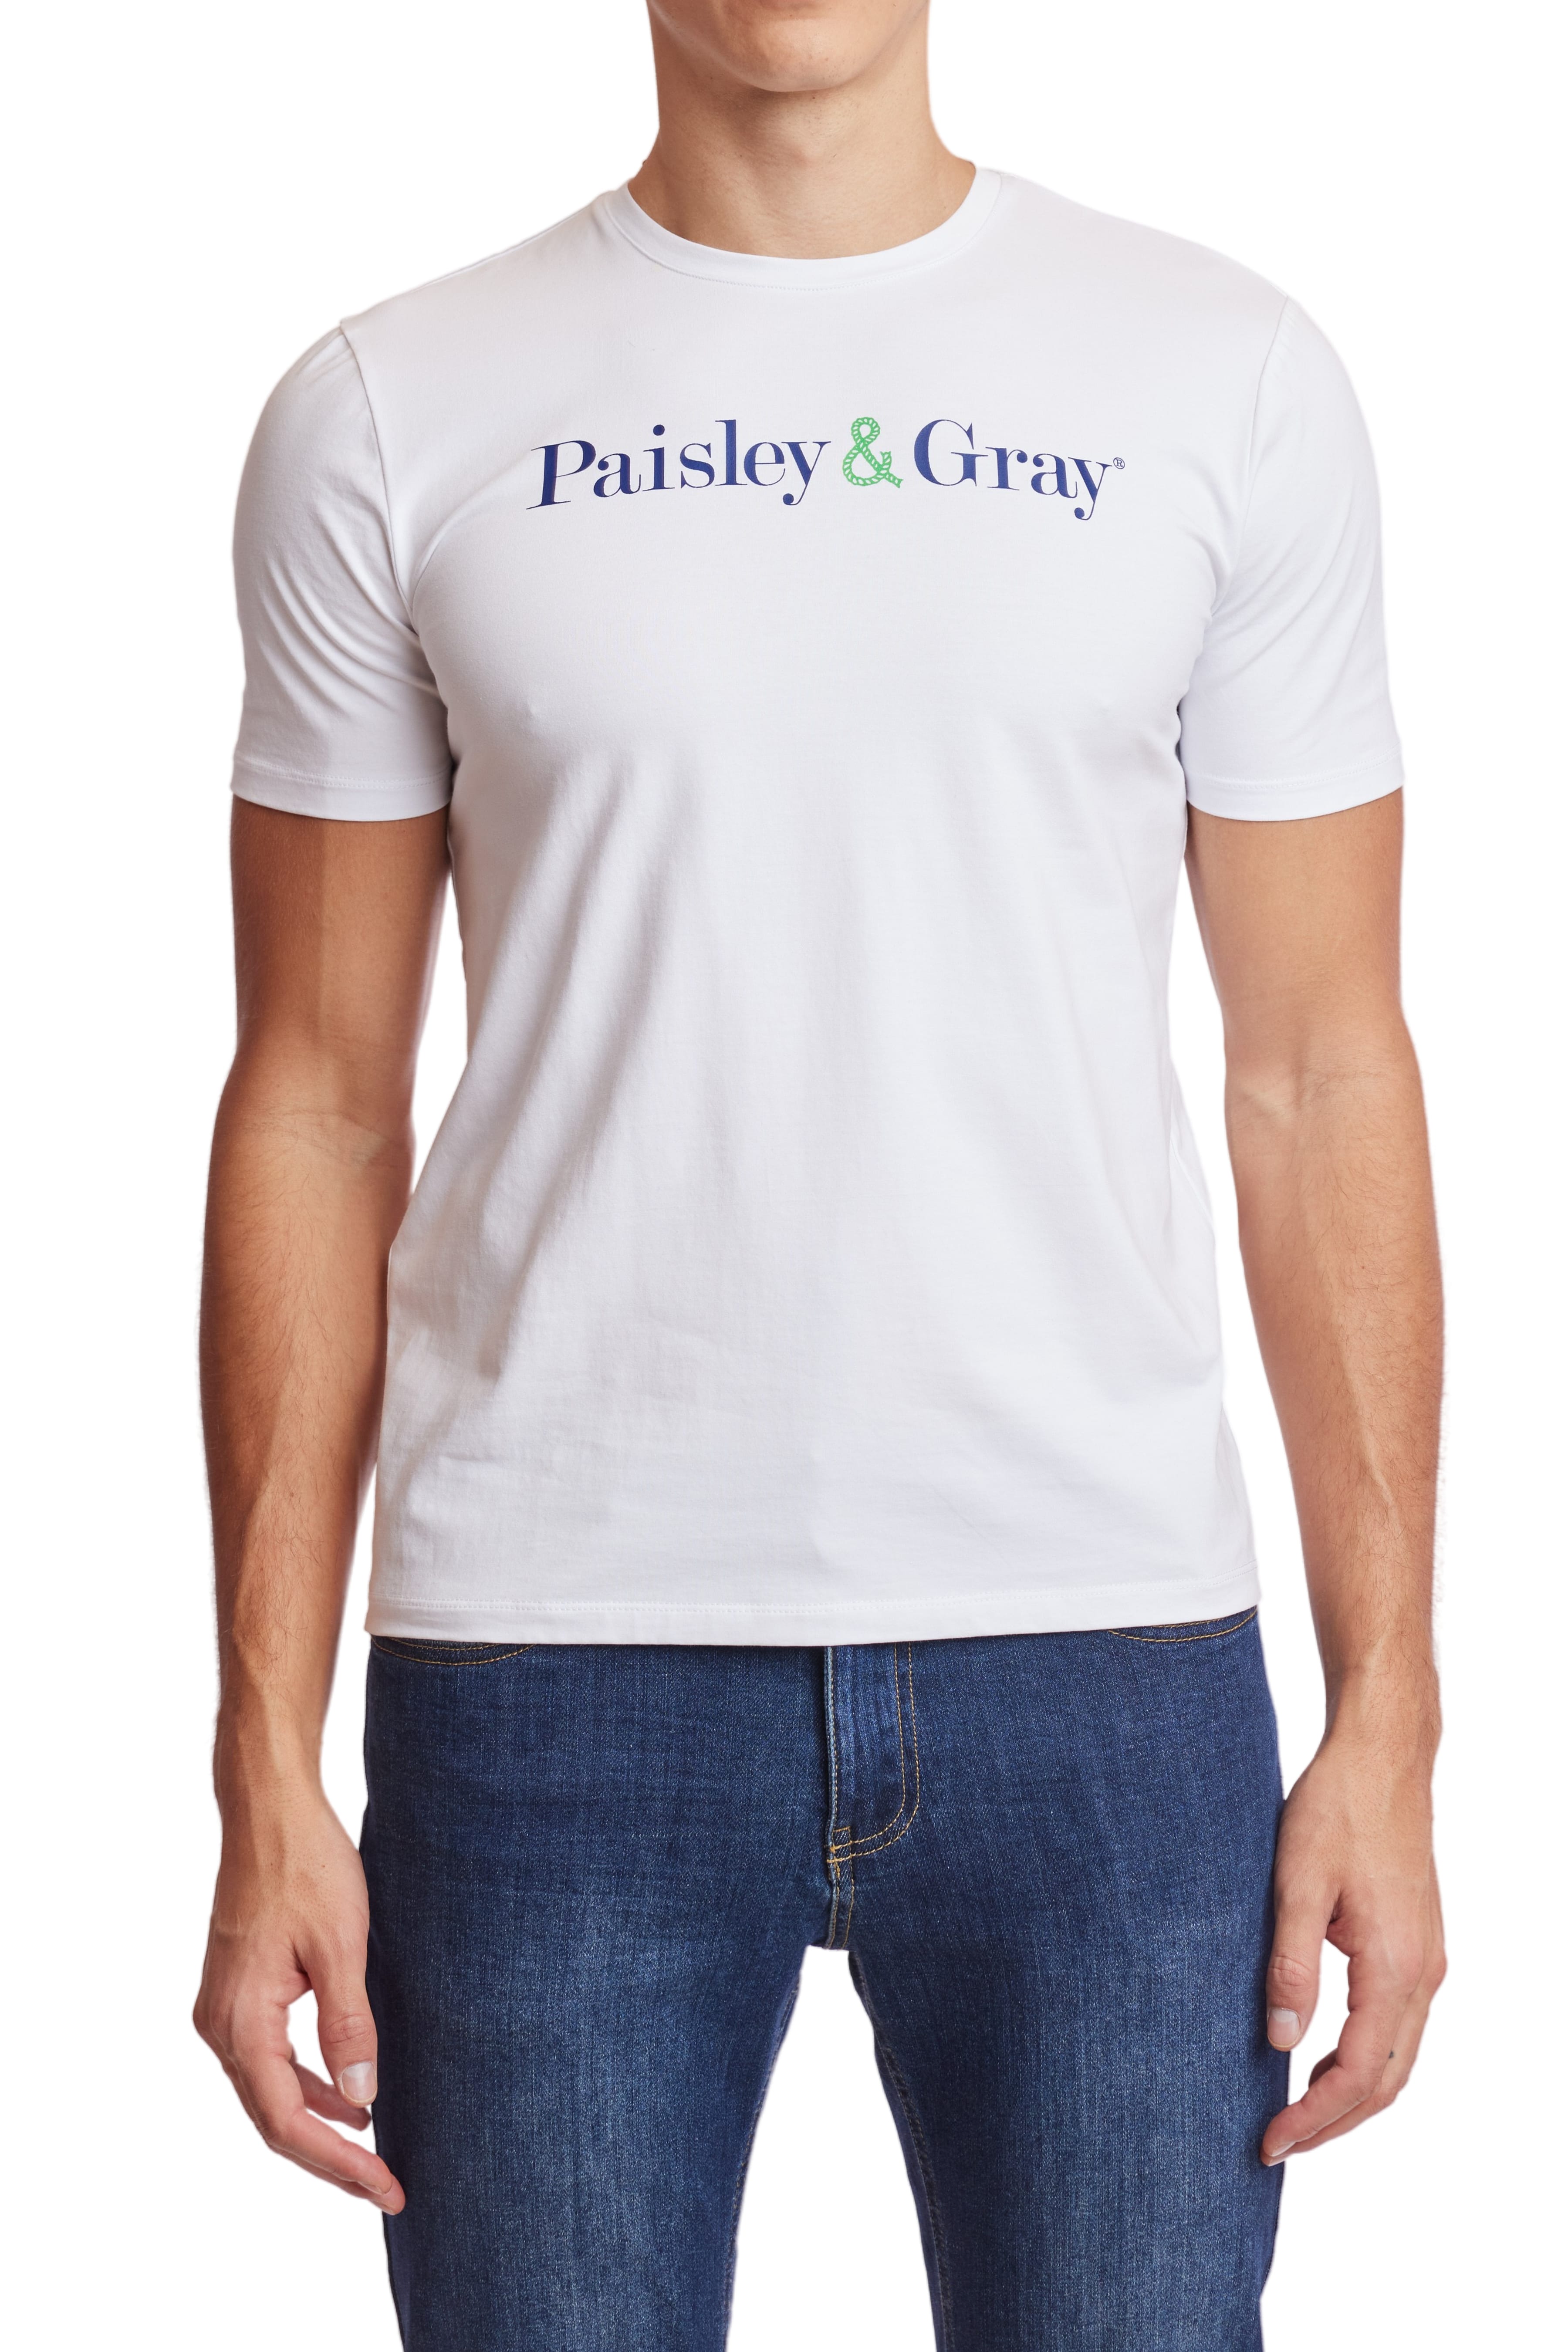 P&G Crew Logo T-shirt - White Navy Logo